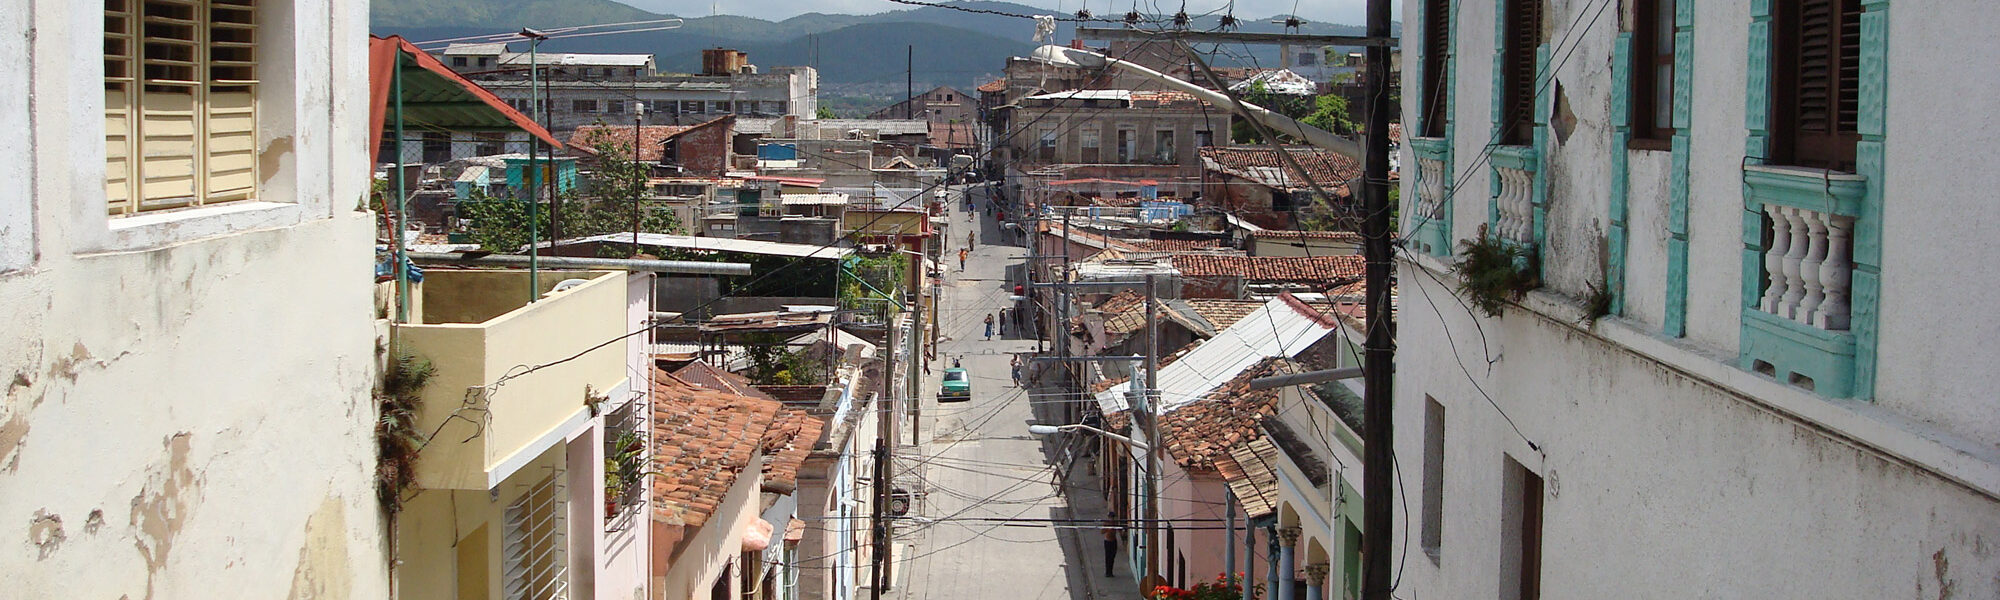 Calle Padre Pico - Santiago de Cuba - Cuba